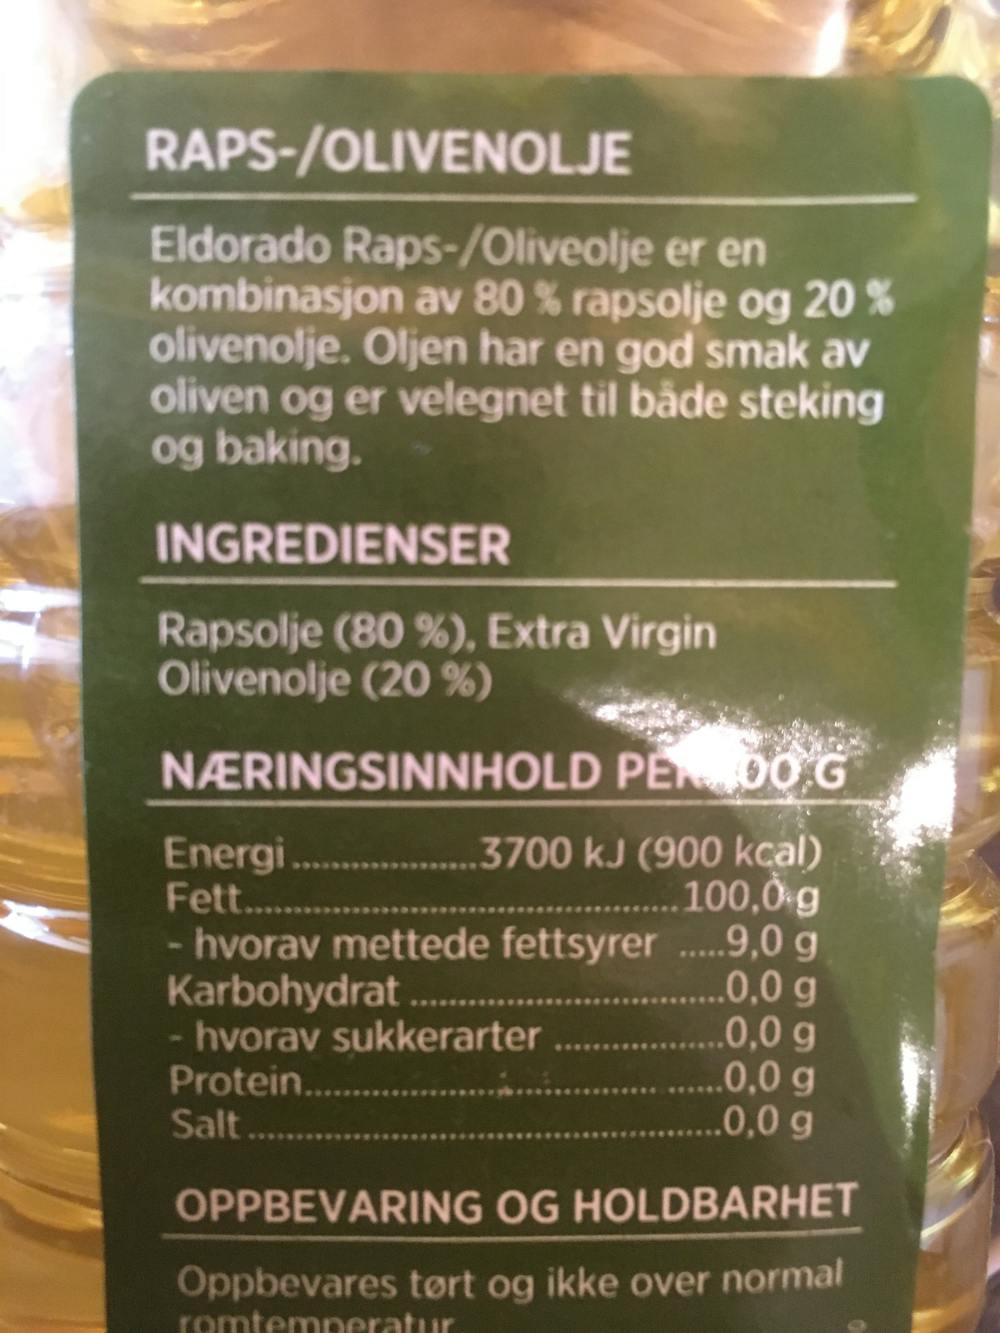 Ingredienslisten til Eldorado Raps-/olivenolje